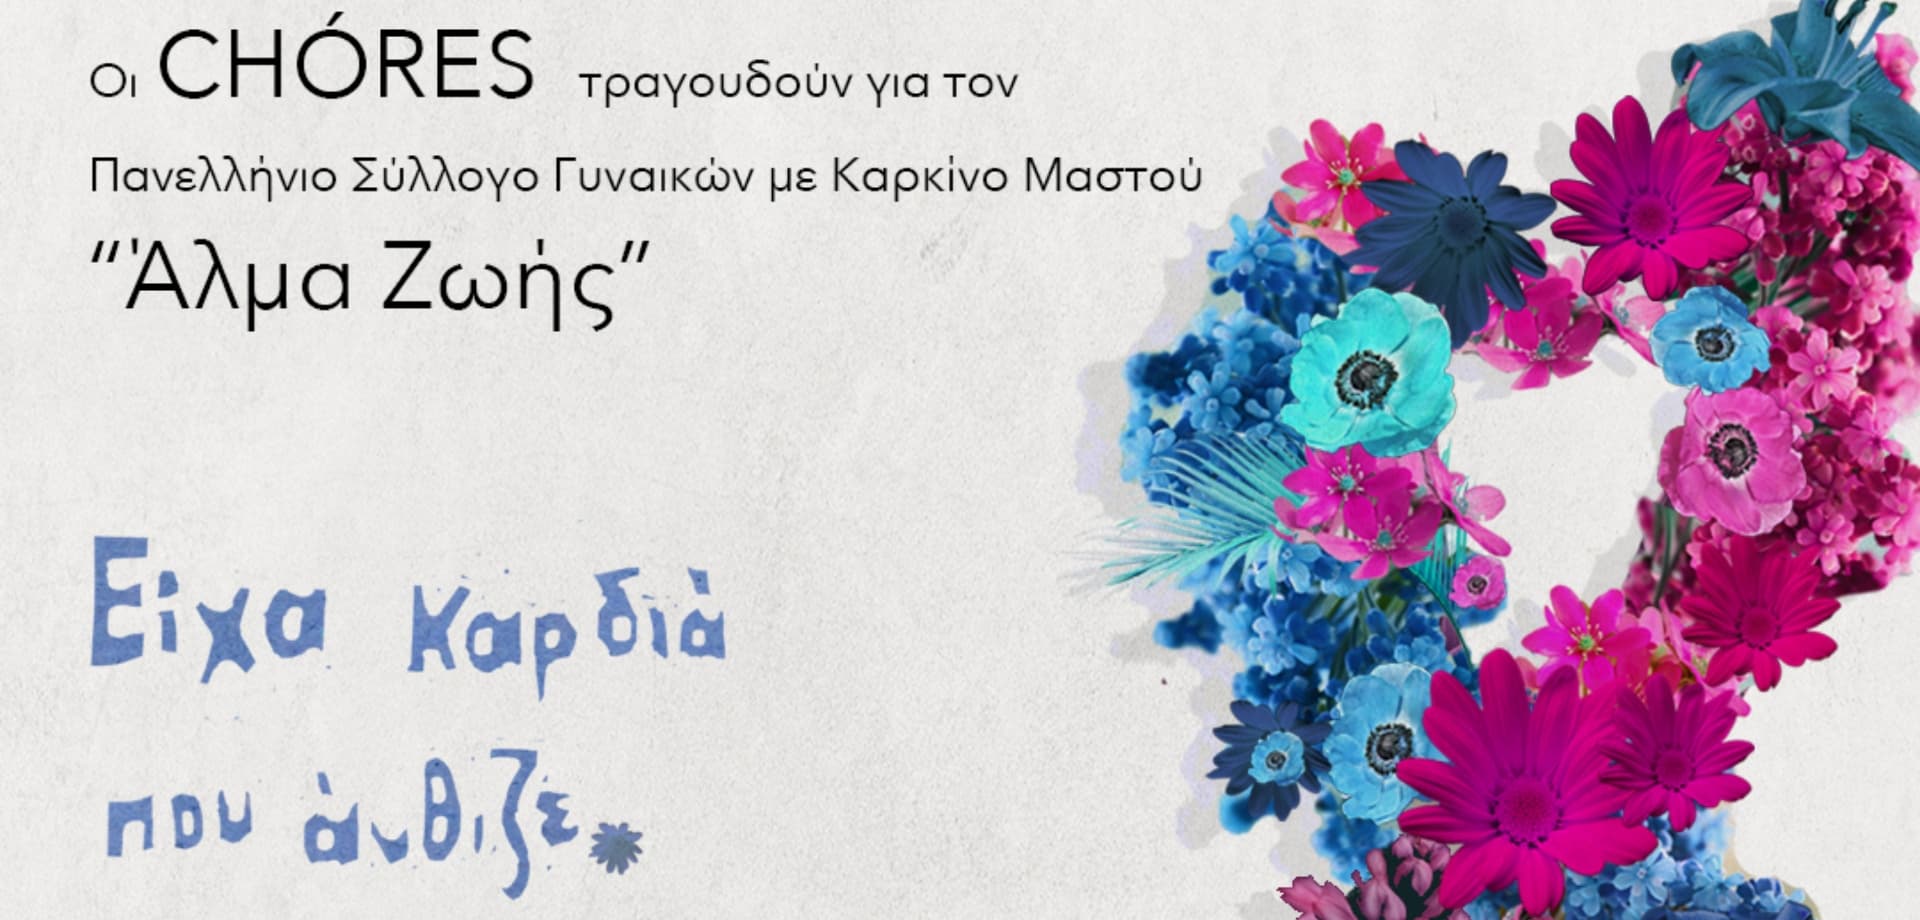 CHÓRES της Μαρίνας Σάττι «Άλμα Ζωής» Τεχνόπολη Δήμου Αθηναίων